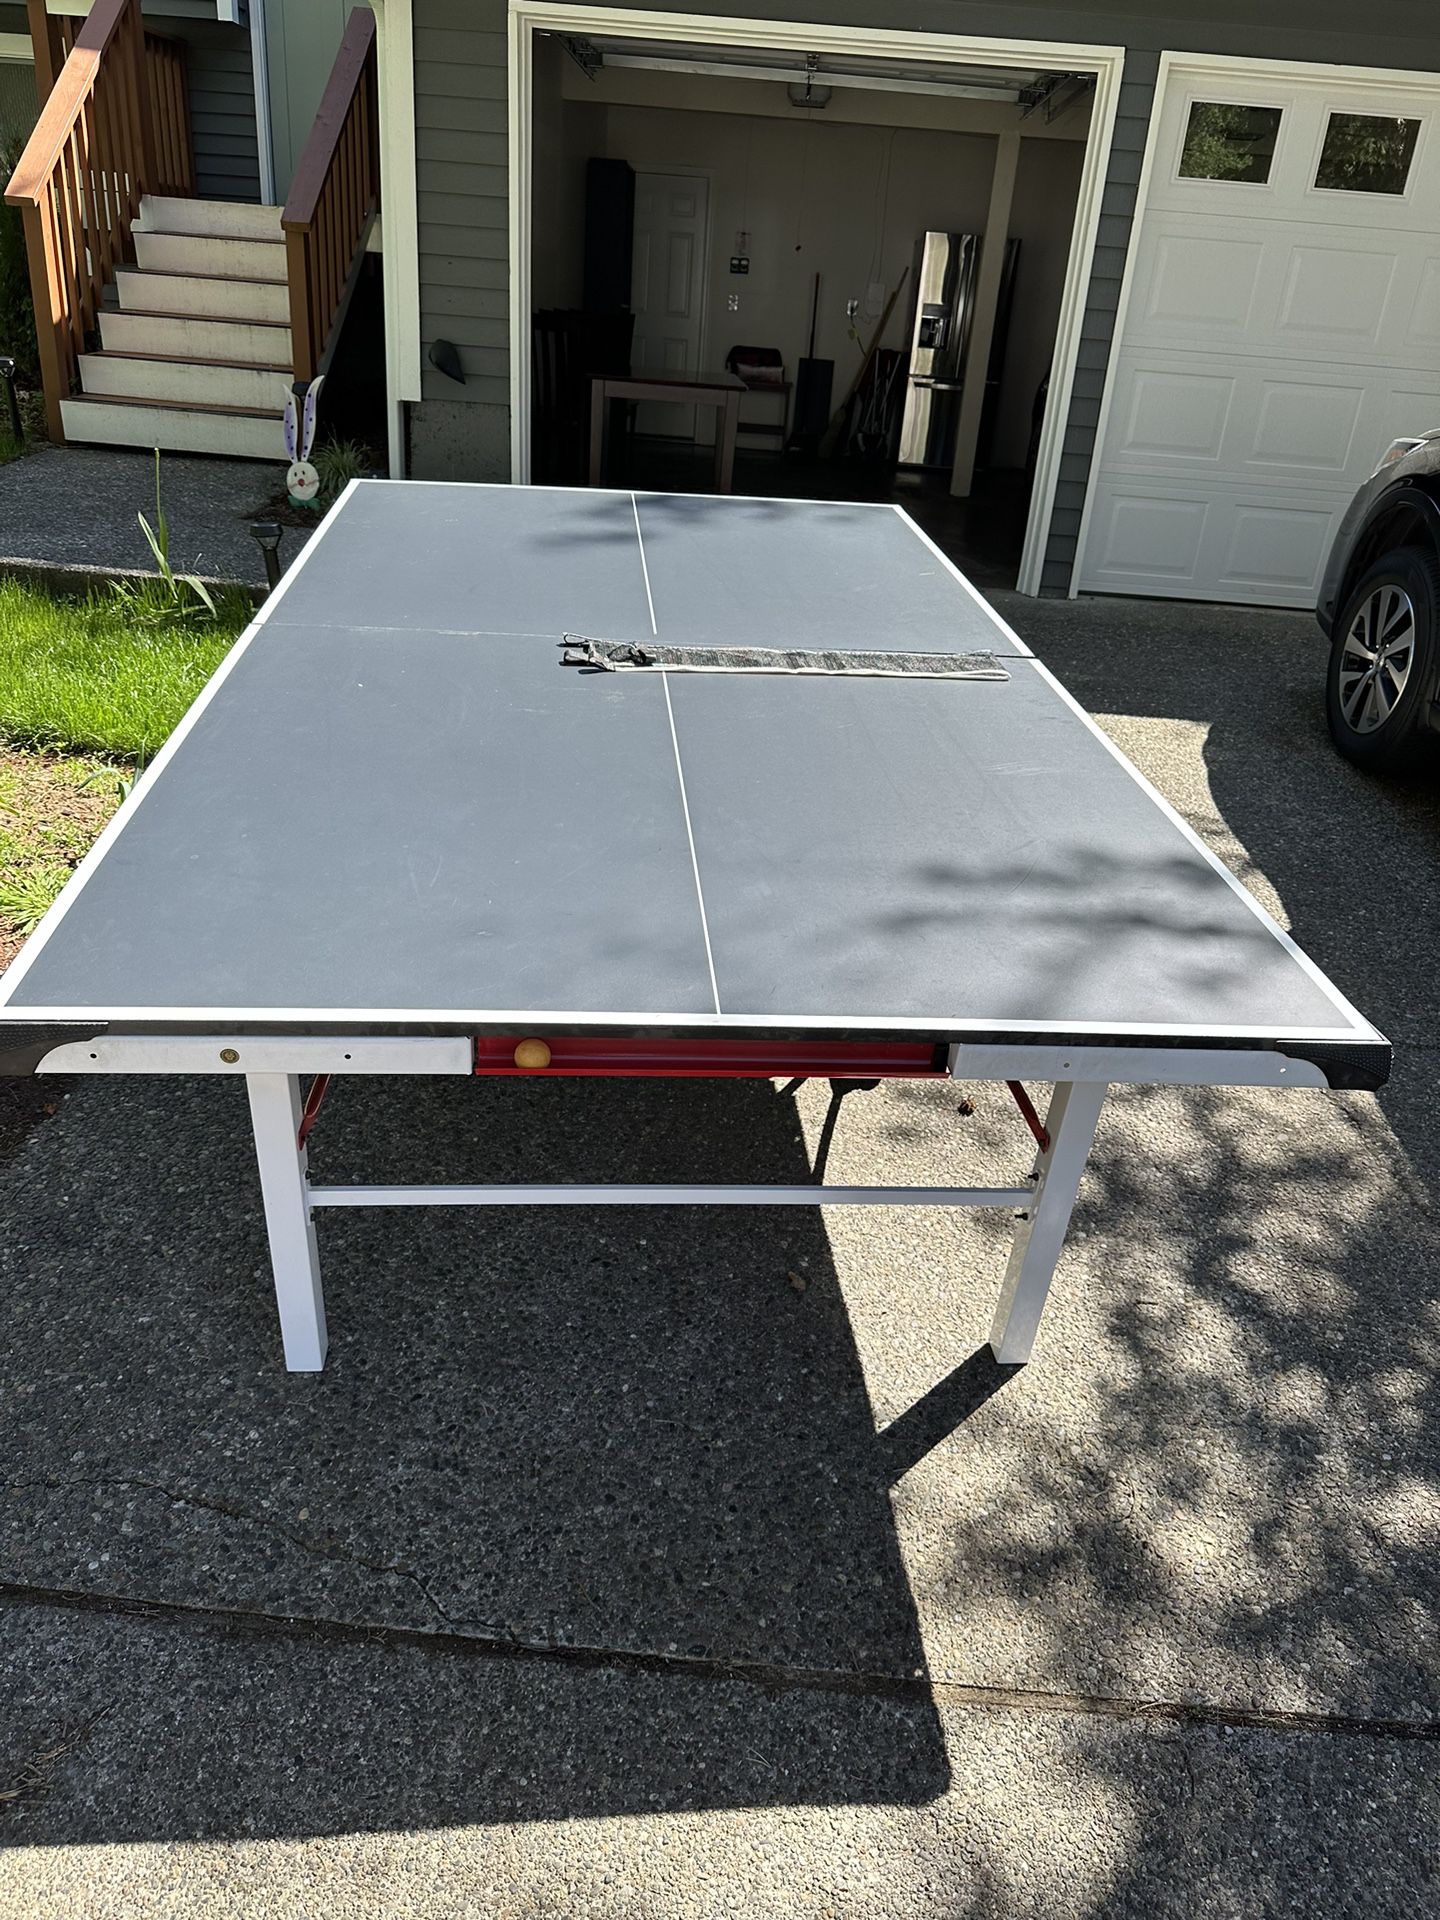 Stiga Ping Pong Table